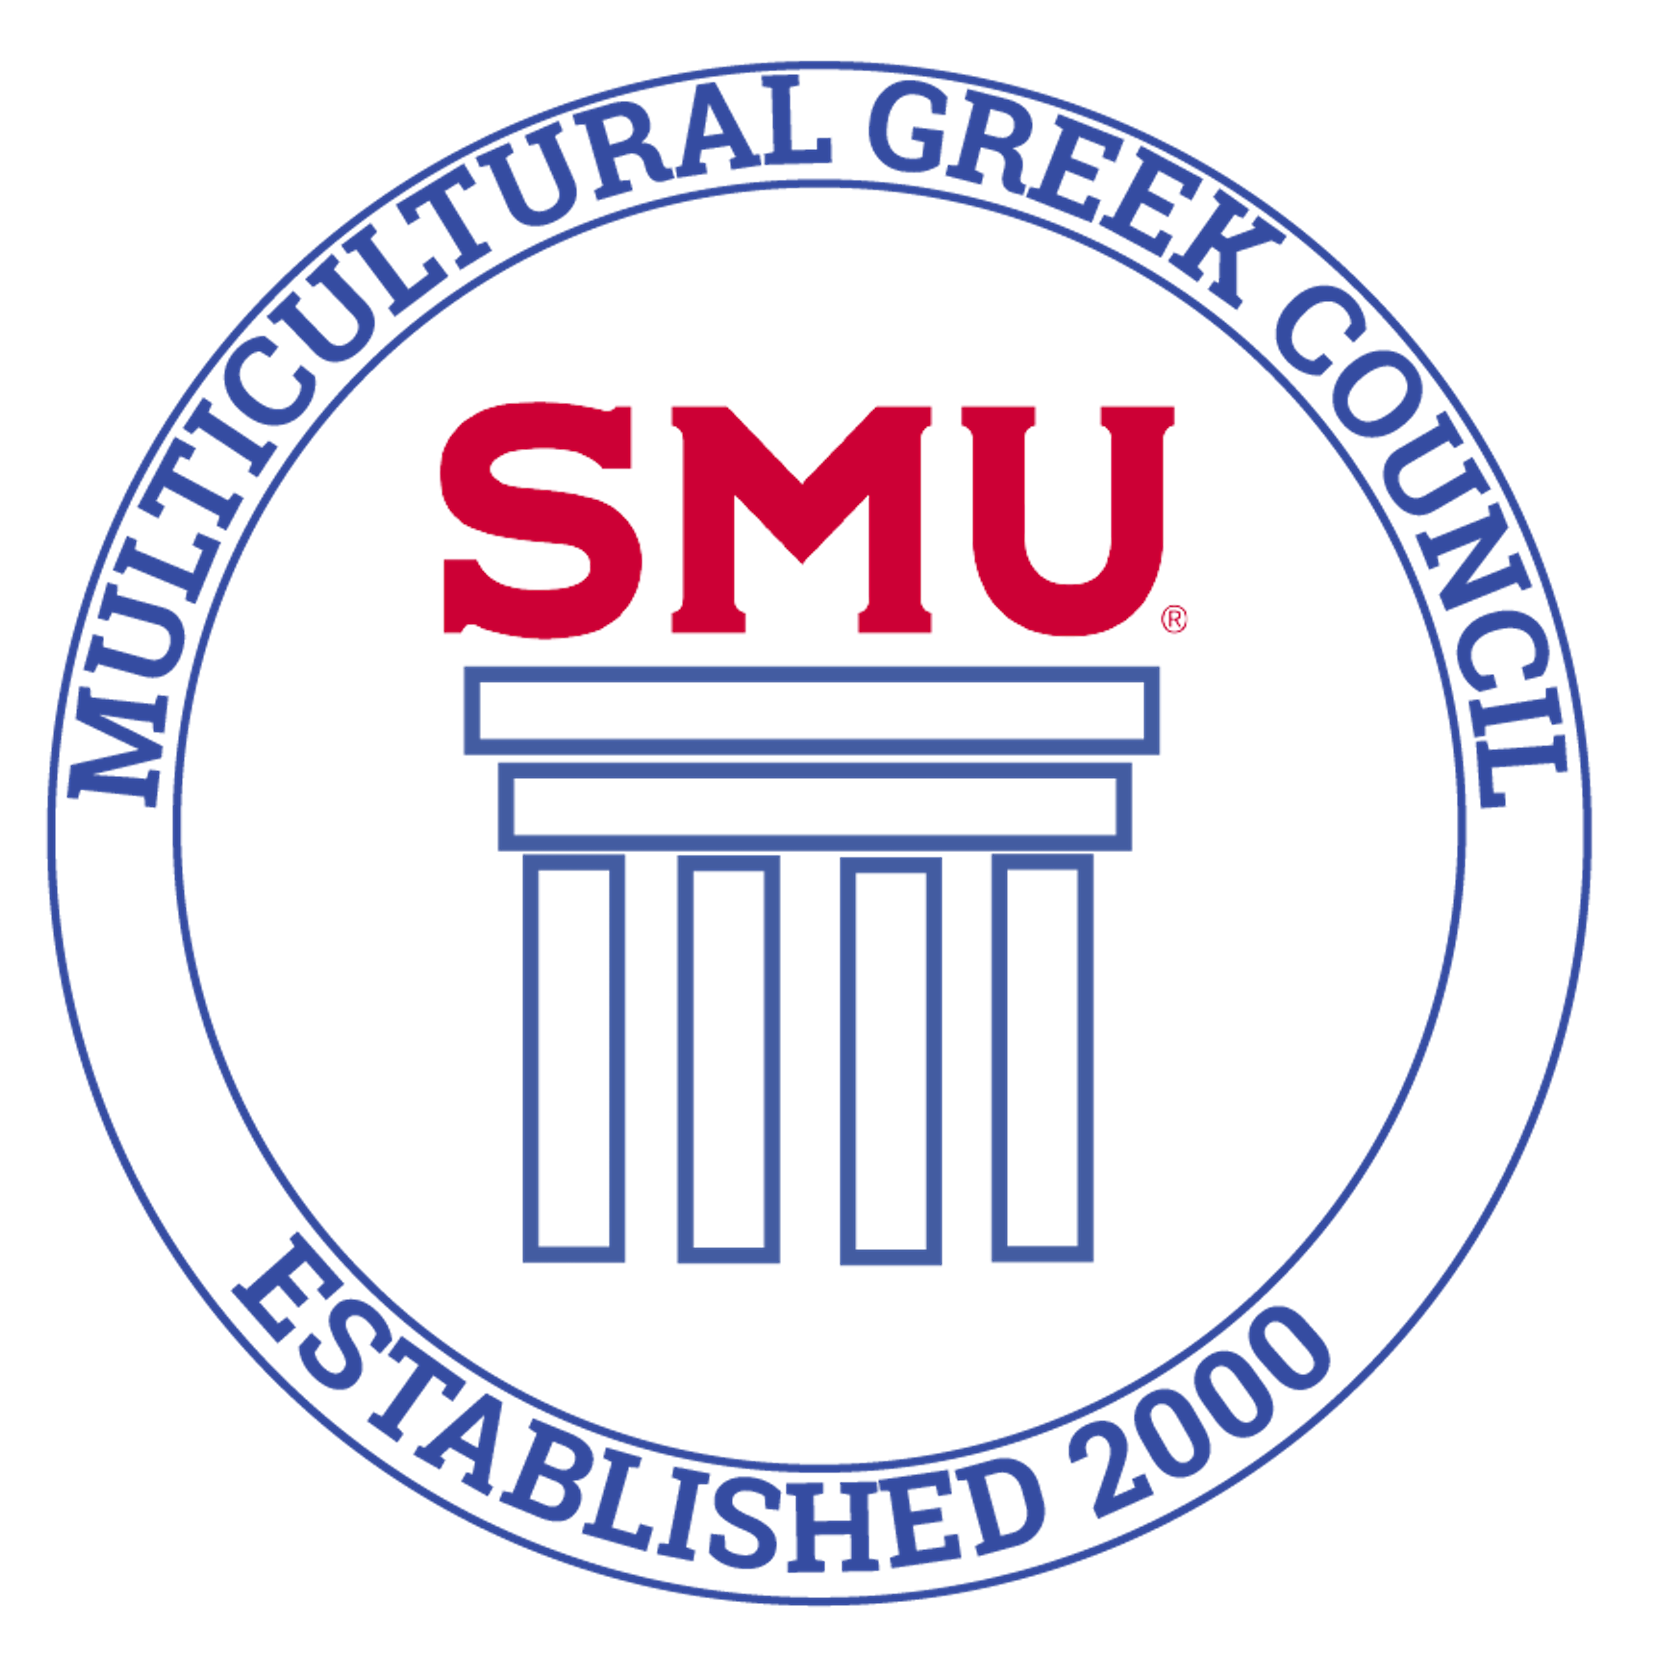 SMU Multicultural Greek Council logo